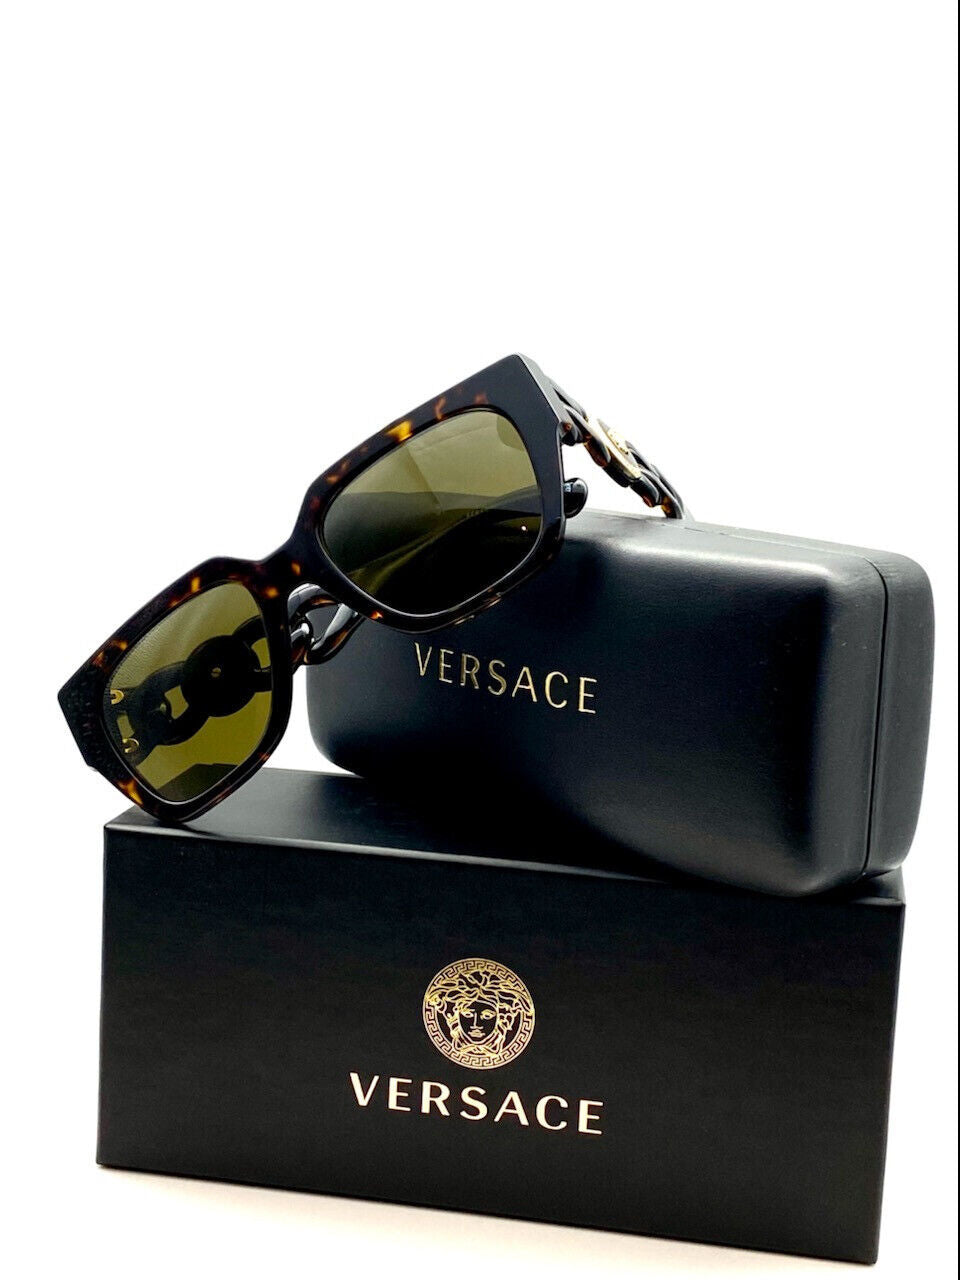 Versace VE4409 108/73 Havana/Dark Brown Full-Rim Square Women's Sunglasses